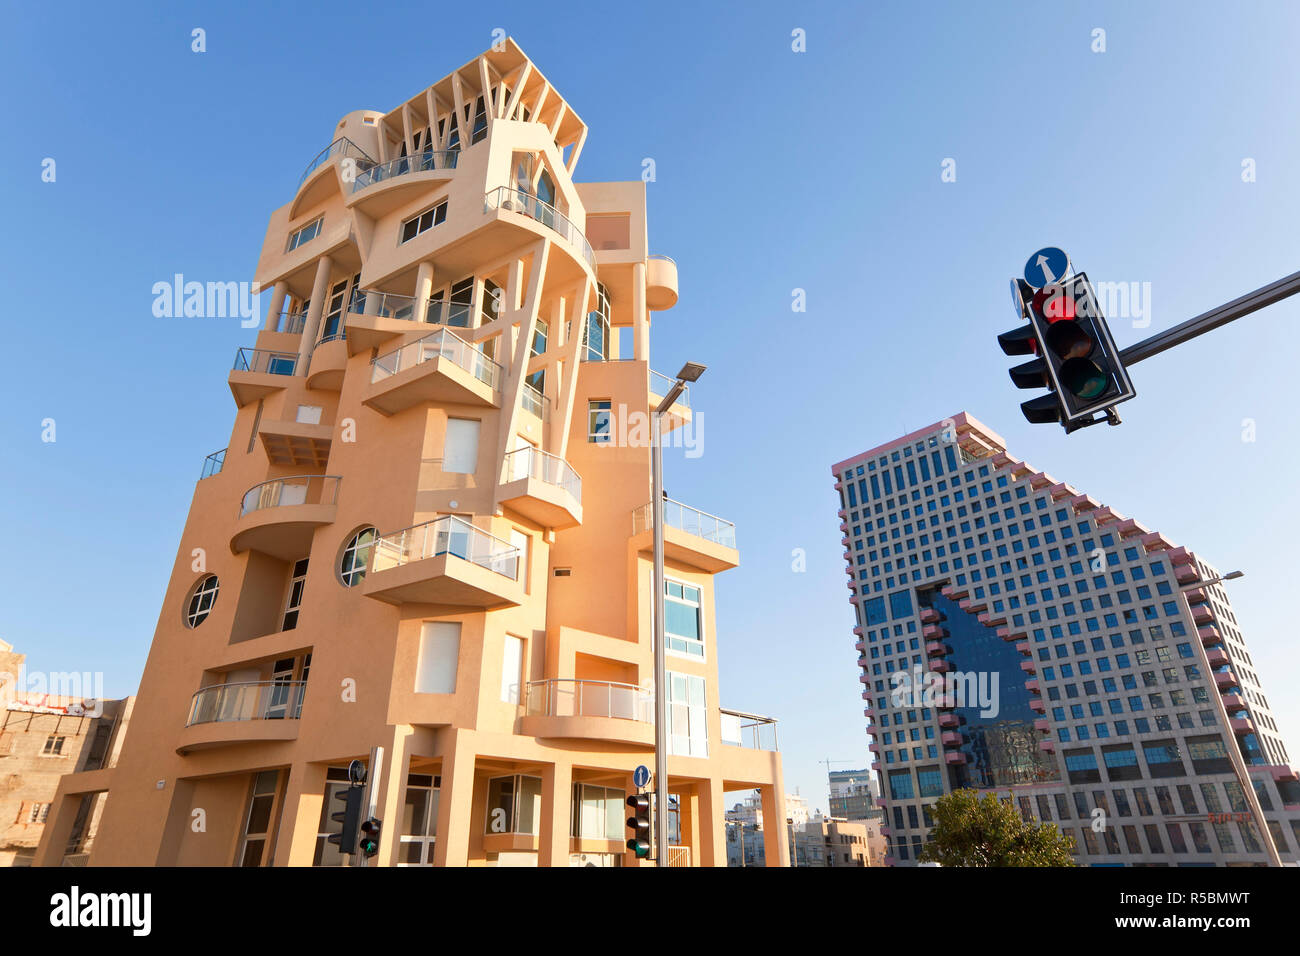 Israel, Tel Aviv, modern architecture along the beachfront Stock Photo